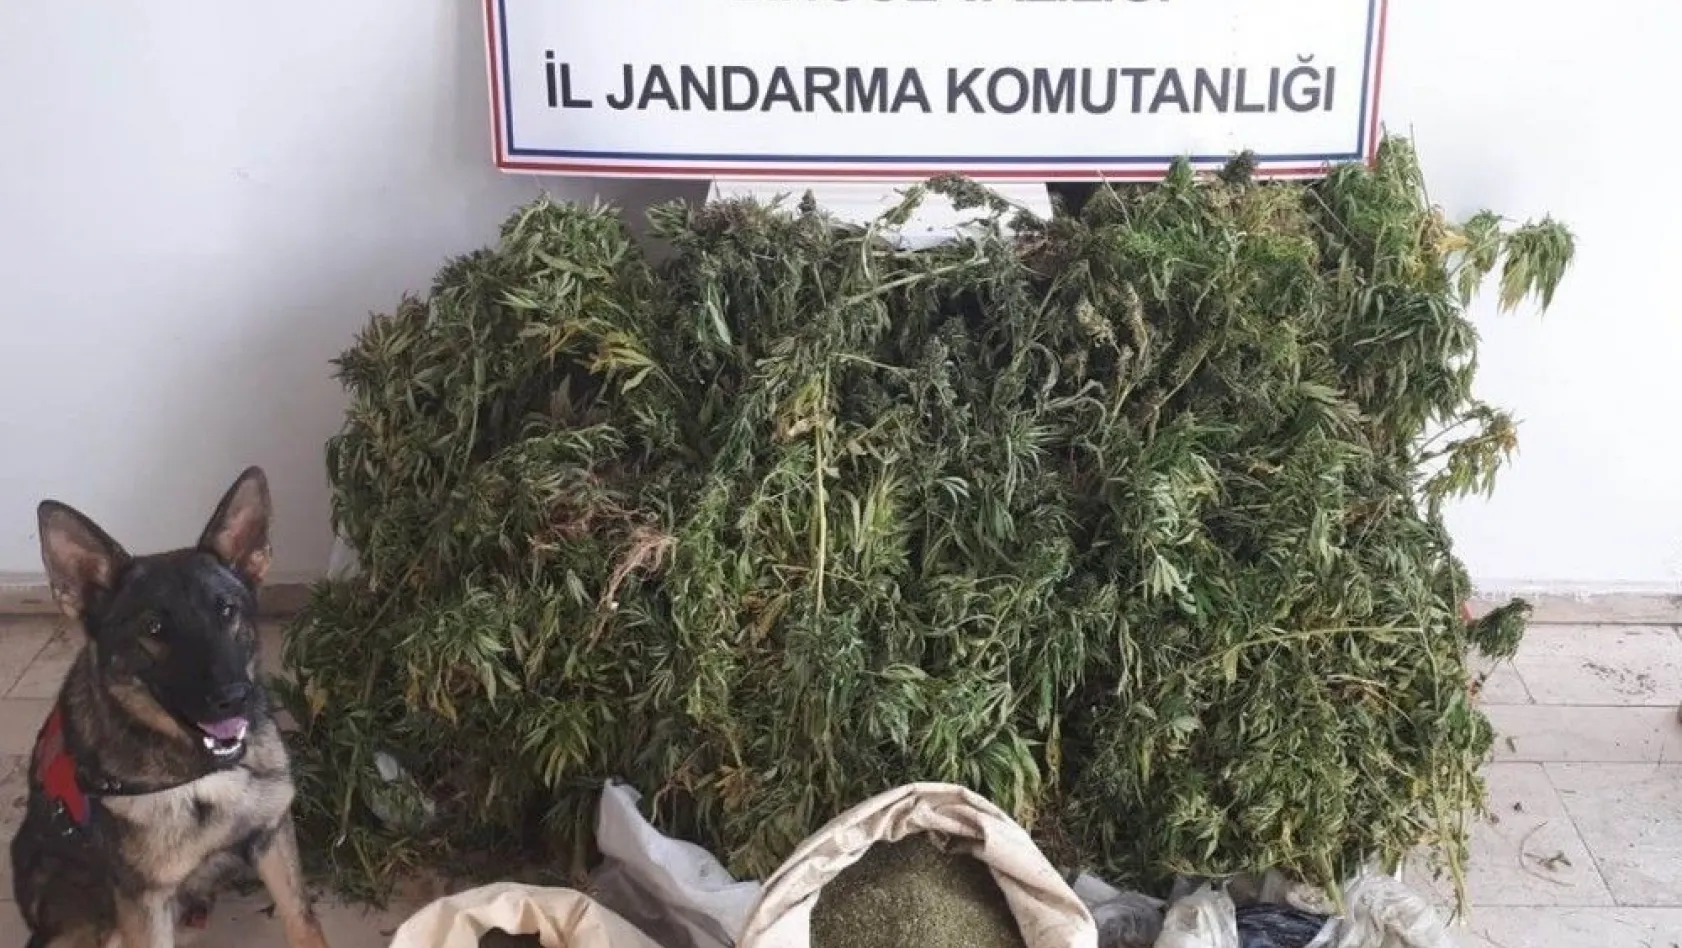 Bingöl'de 158 kilo uyuşturucu ele geçirildi
